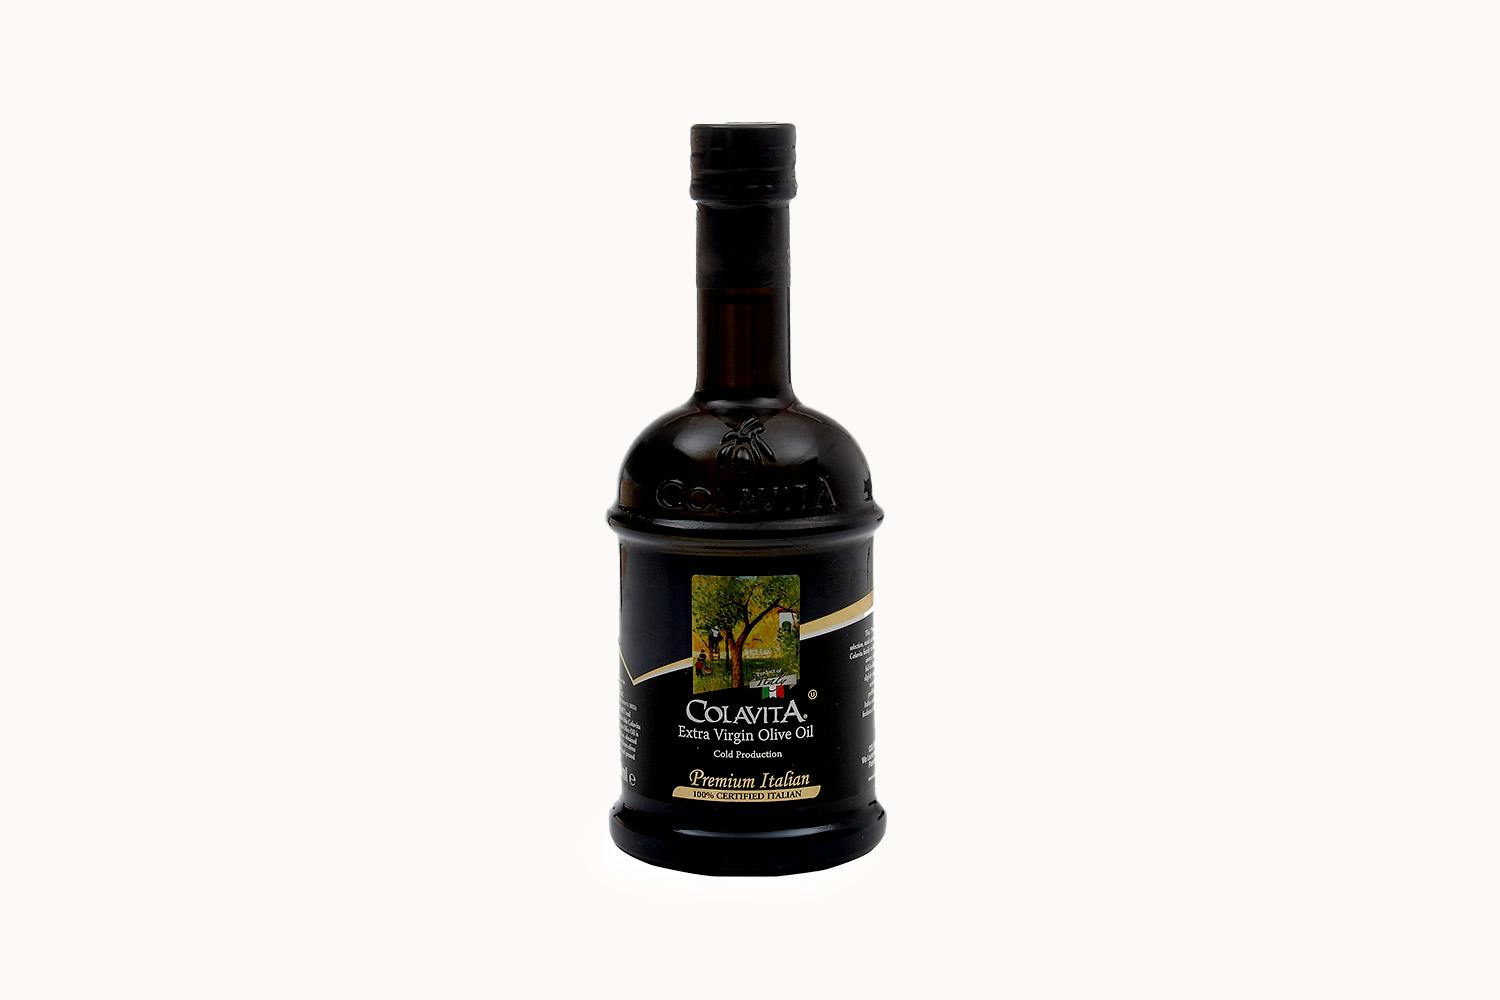 Colavita Italian Extra Virgin Olive Oil